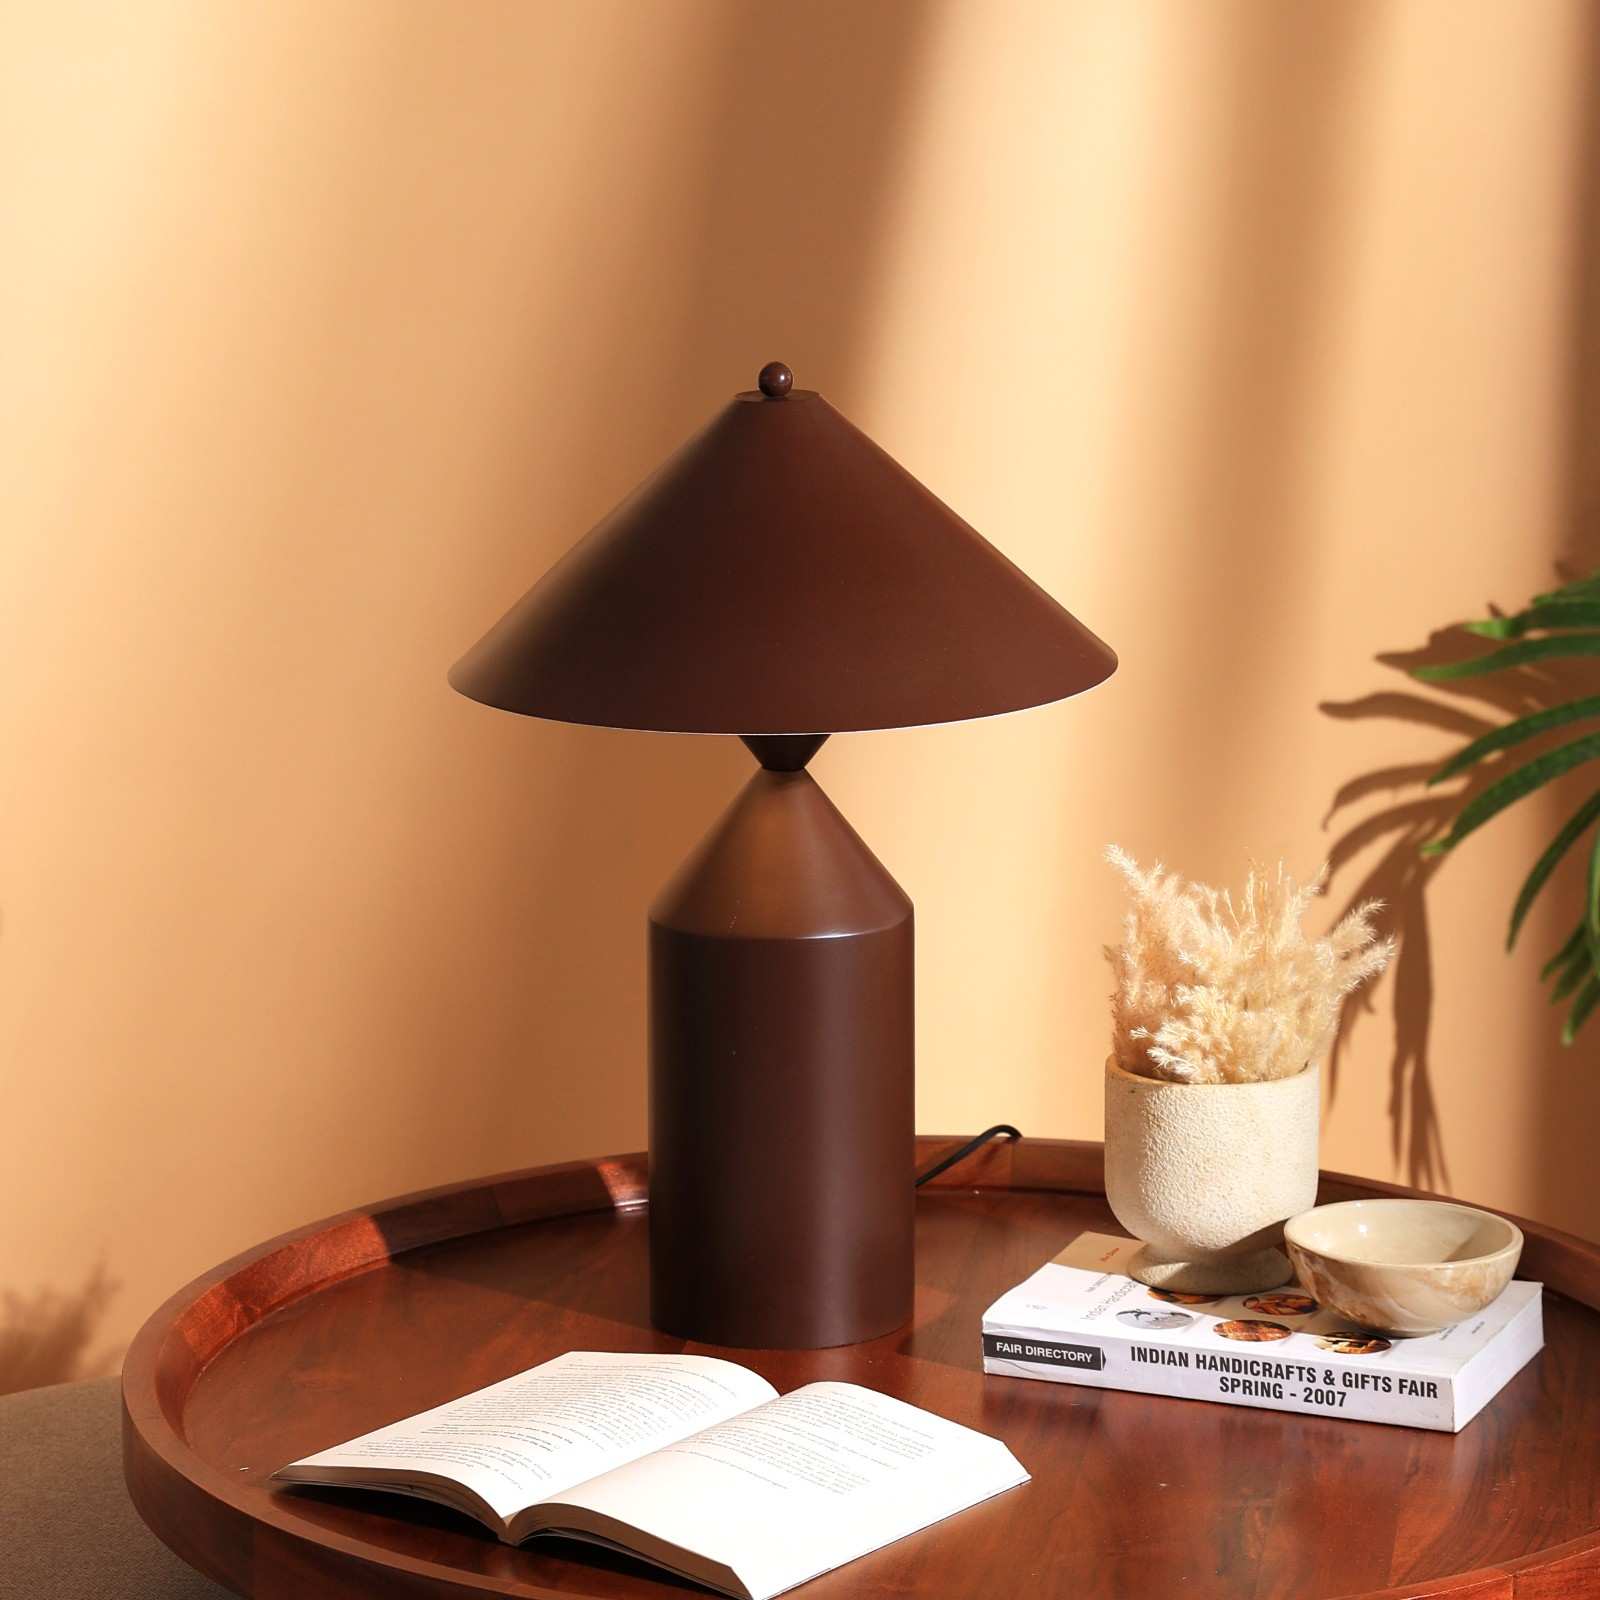 Cone Casa - Table Lamp - Modern Scandinavian Design, Premium Metallic Finish, Easy Installation